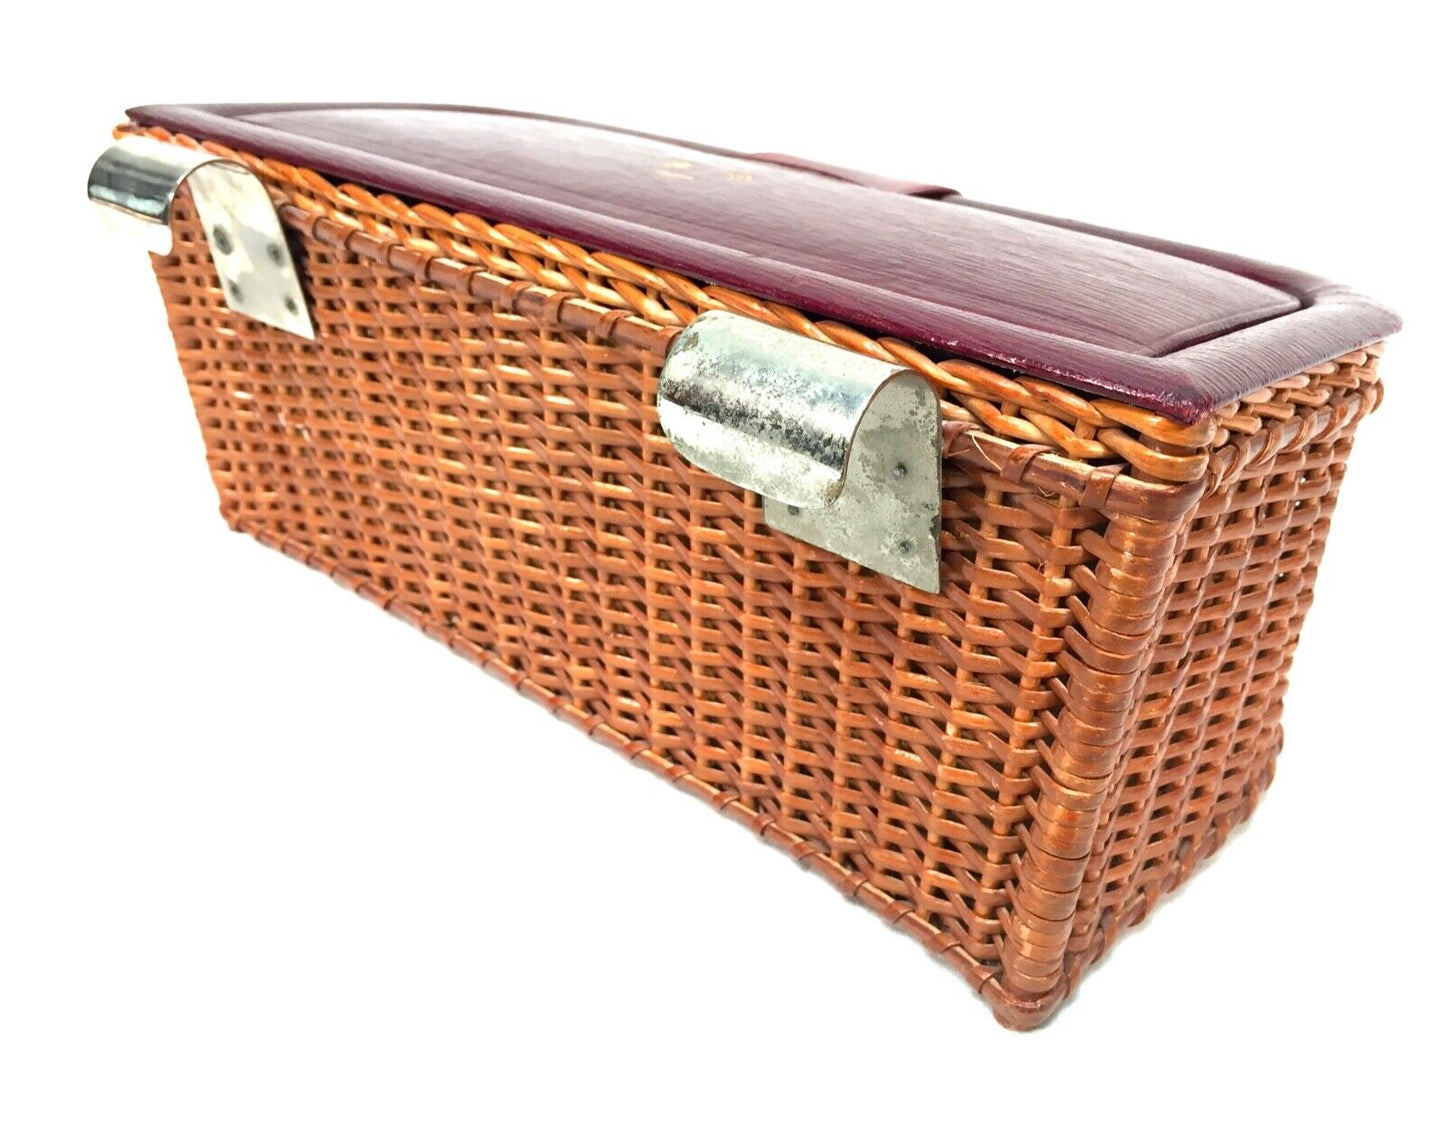 Antique Messenger Red Leather Bound Stationery Box & Wicker Basket Design c.1910